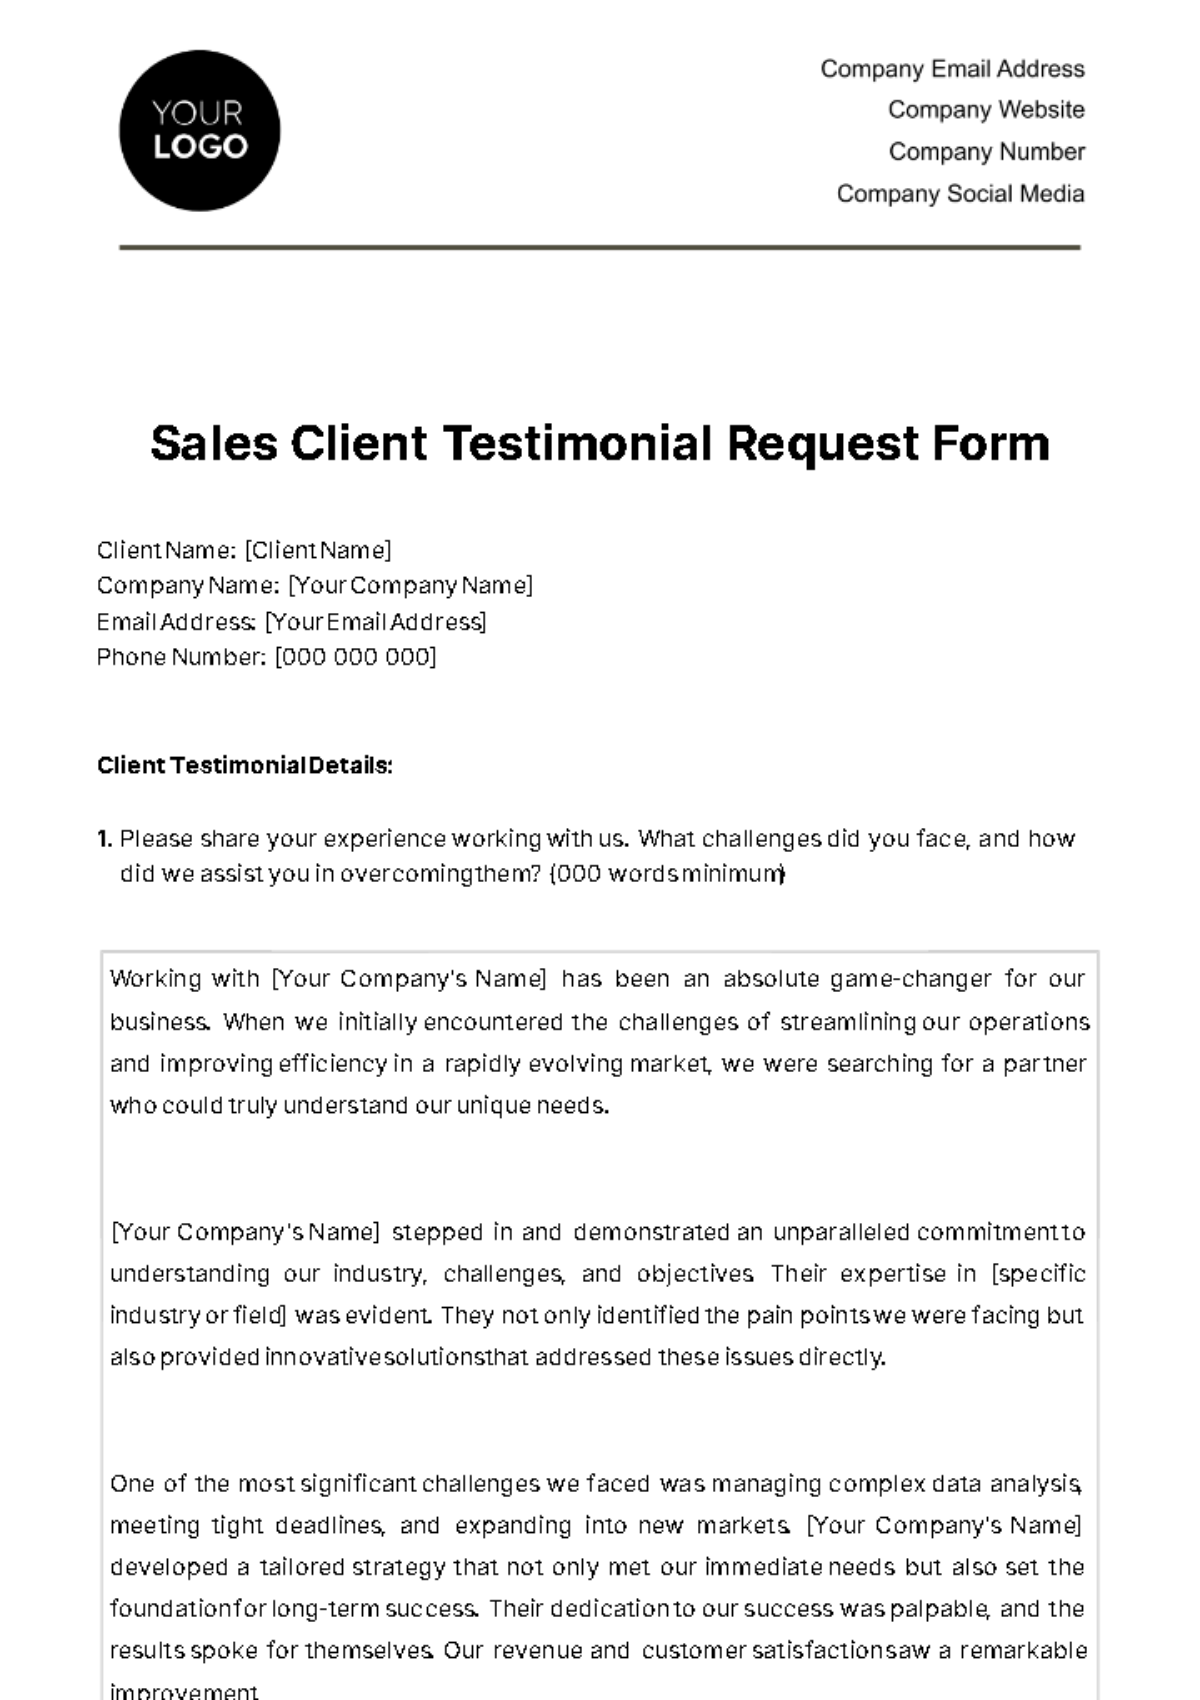 Sales Client Testimonial Request Form Template